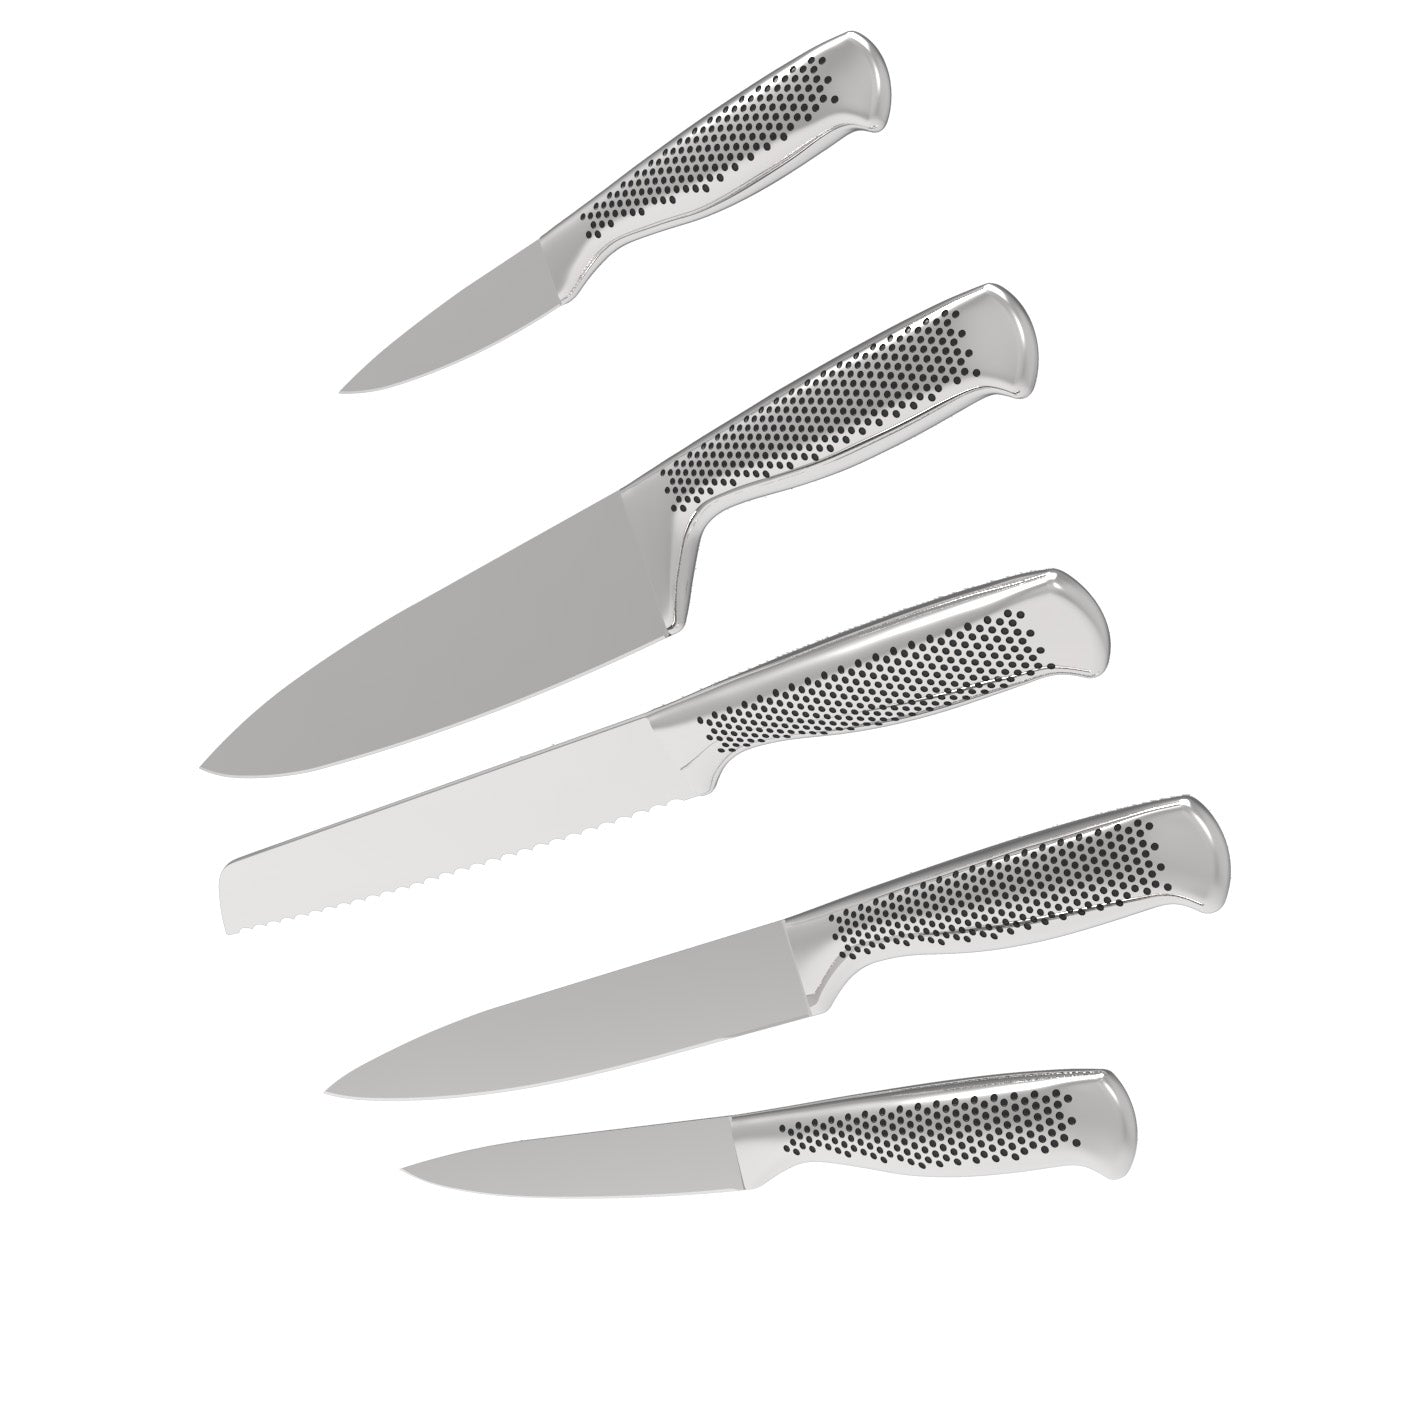 Voodoo/TheEx “Anniversary Edition” 刀具套装 - 备用刀